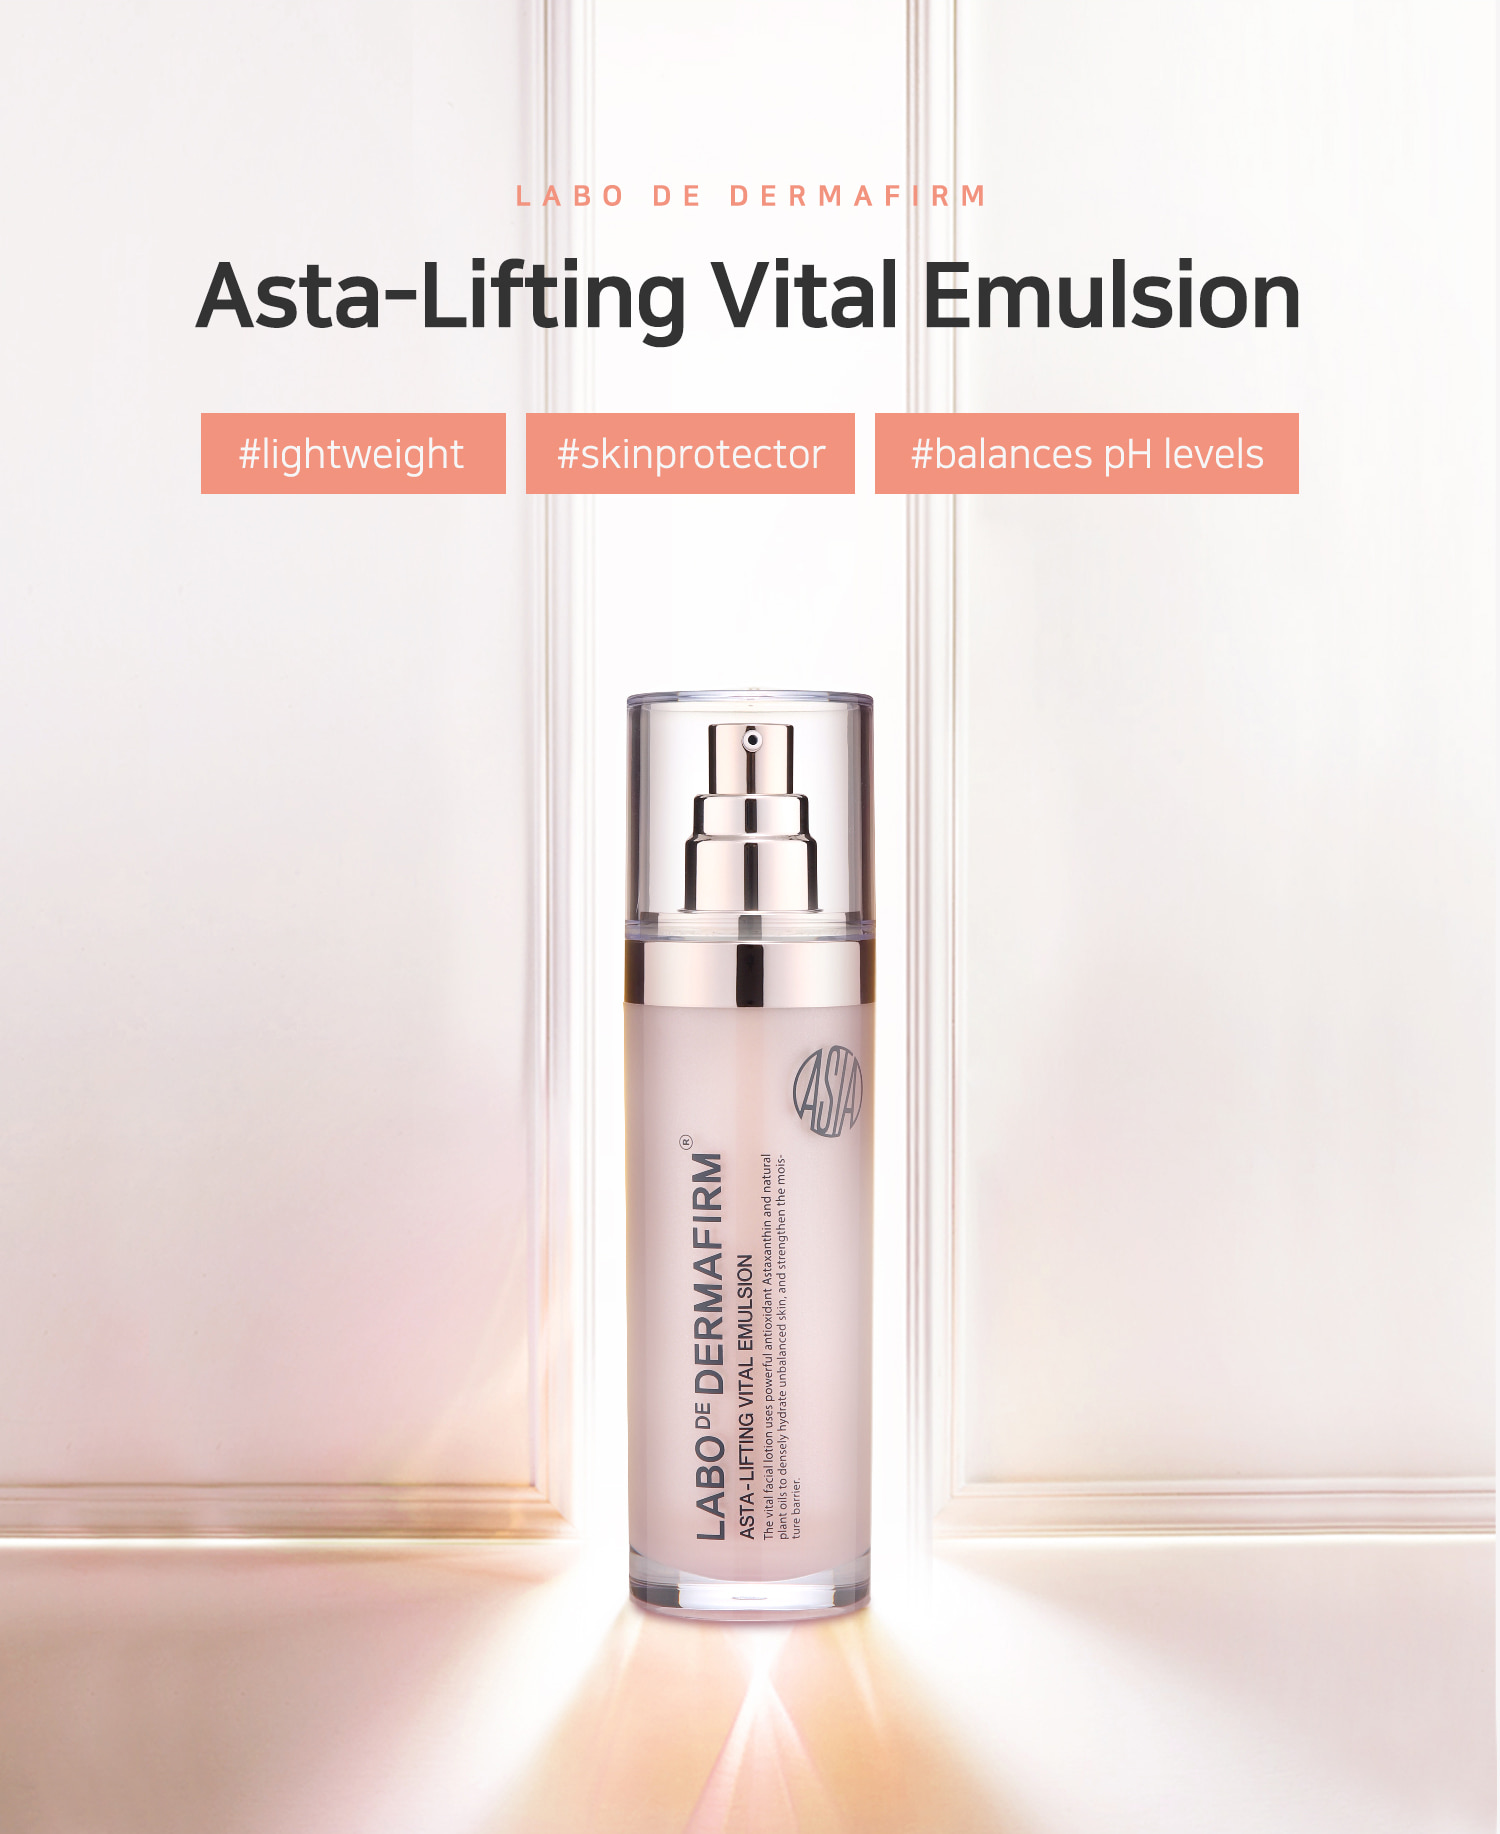 Asta-Lifting Vital Emulsion